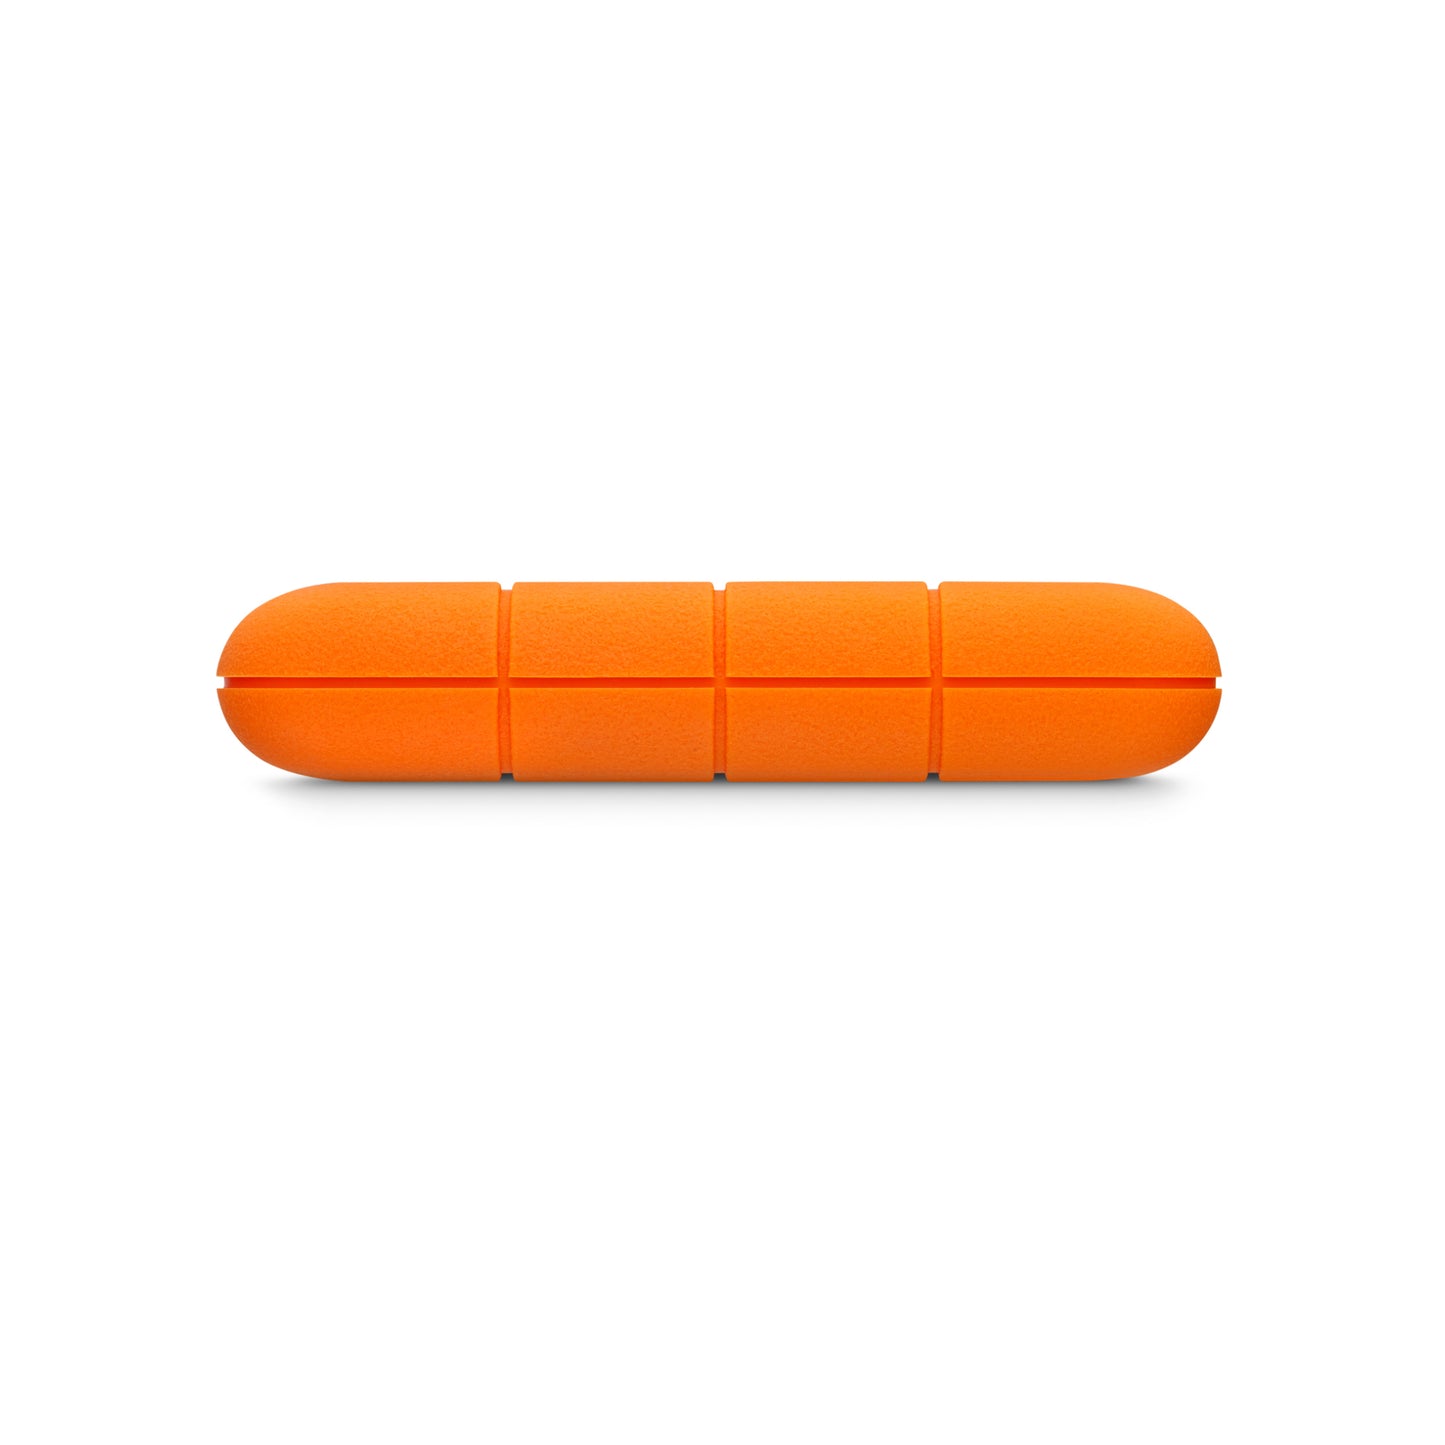 LACIE Rugged Mini USB 3.0 1TB - Orange